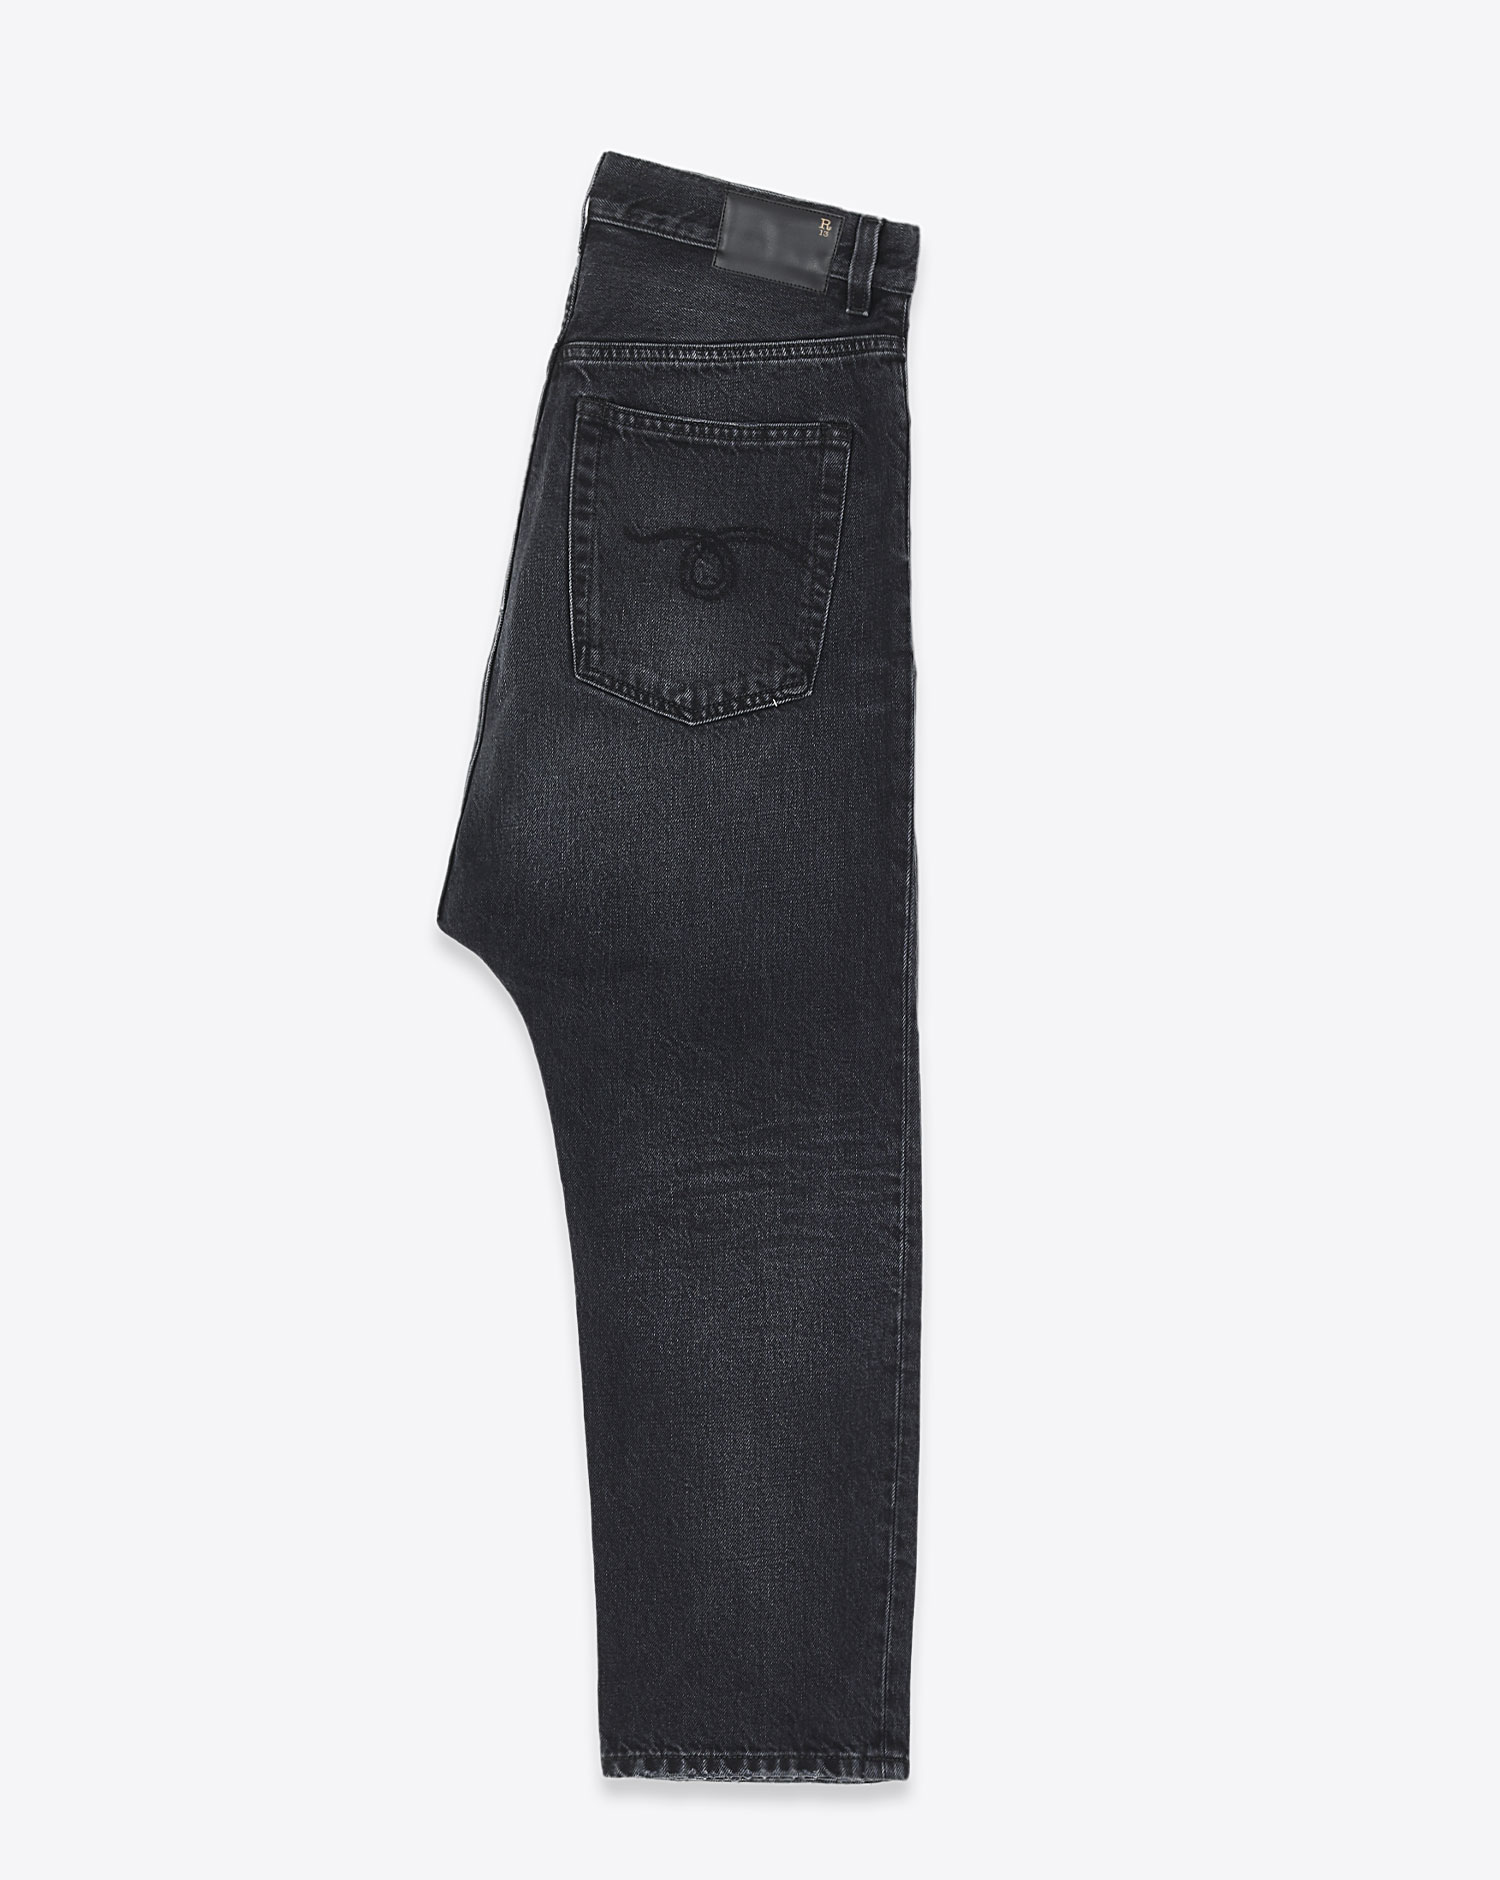 Jeans Tailored Drop R13 Denim en denim noir.  
